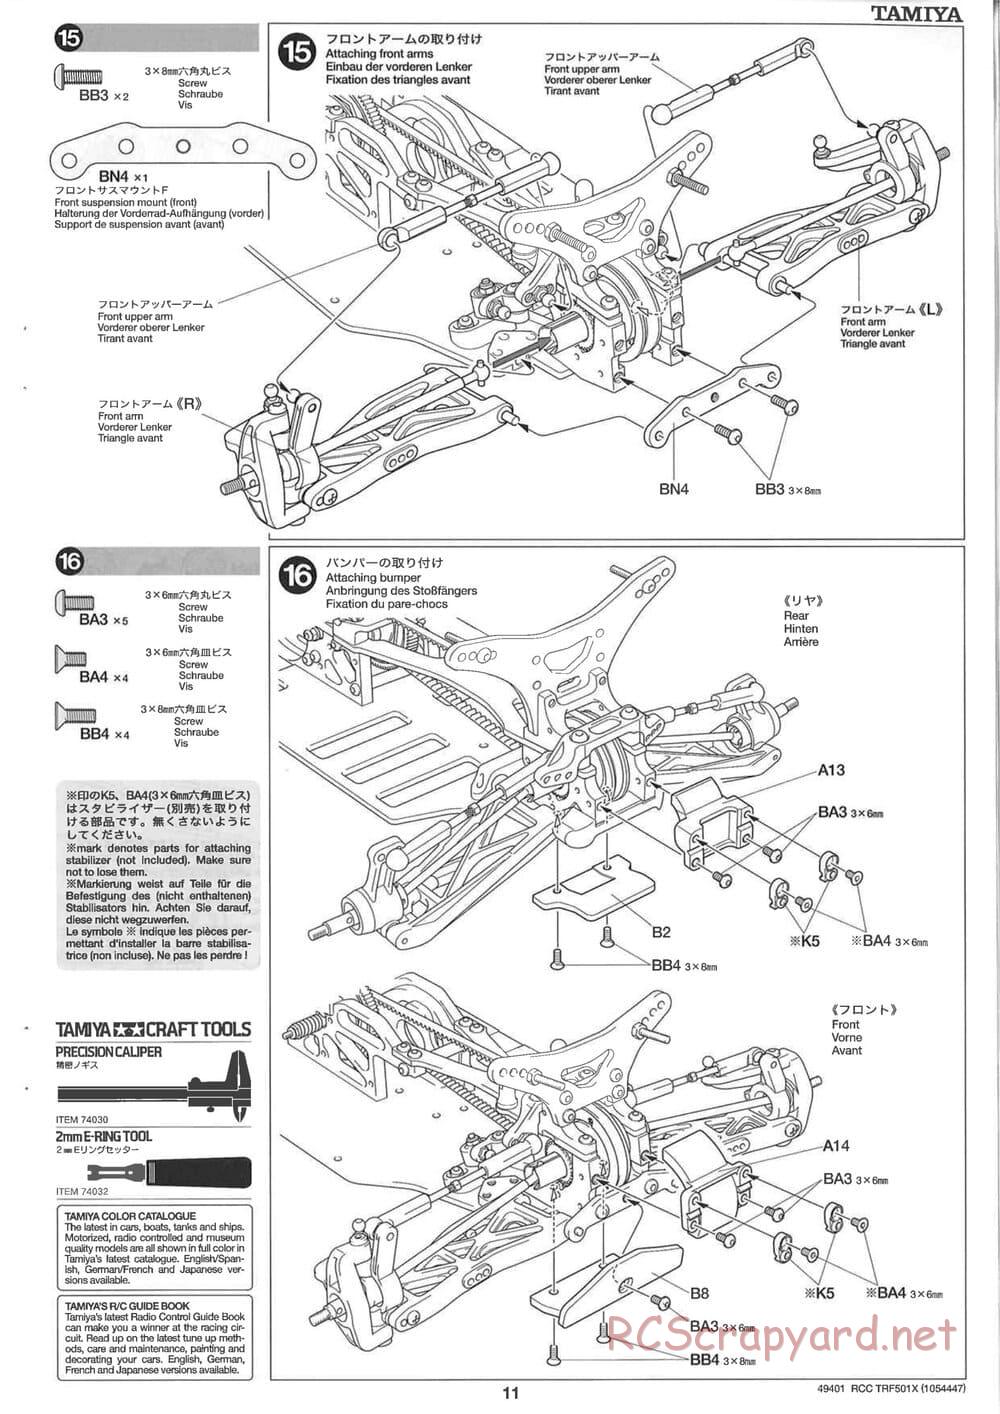 Tamiya - TRF501X Chassis - Manual - Page 11